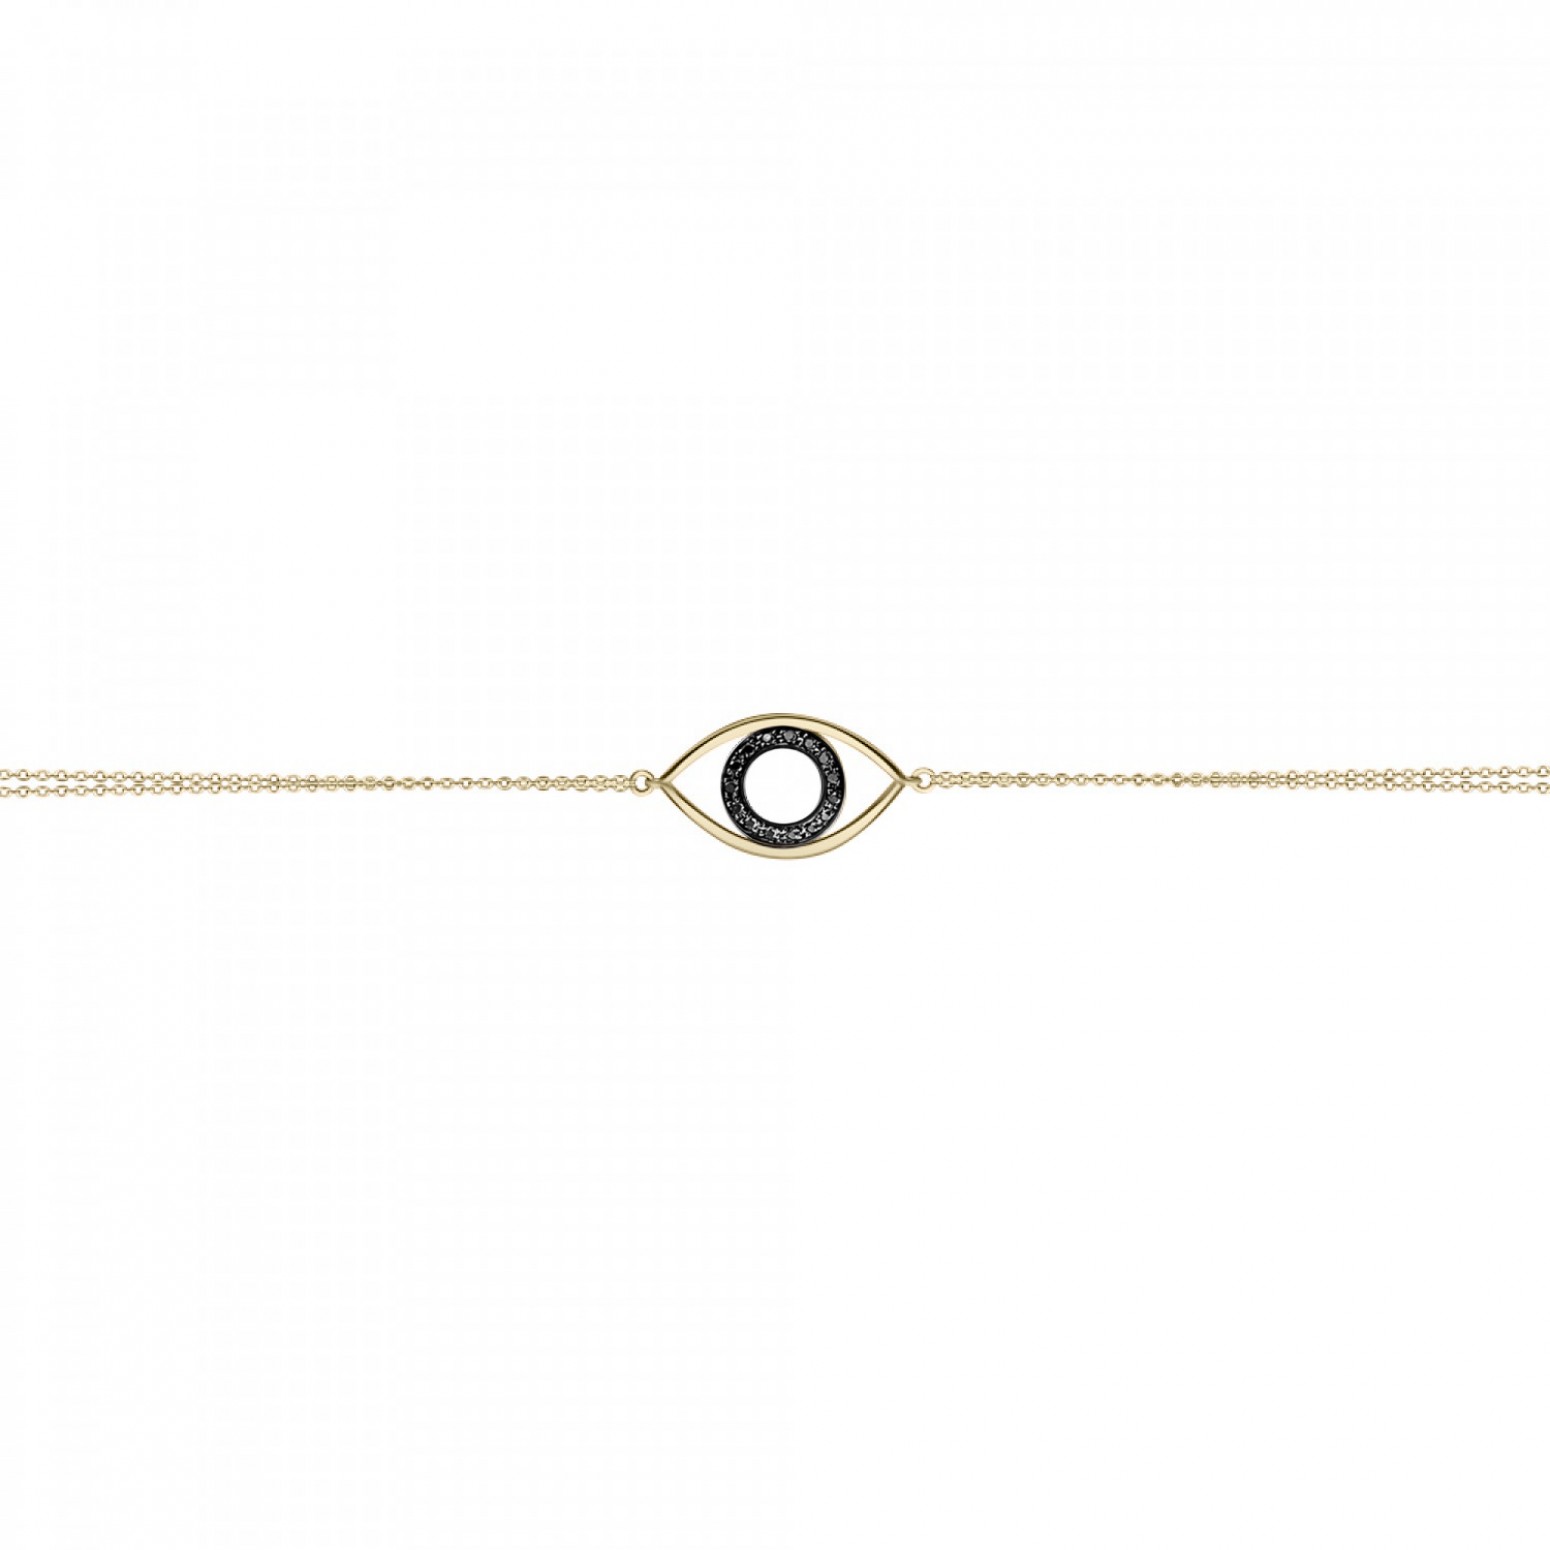 Eye bracelet, Κ14 gold with black diamonds 0.06ct, br3055 BRACELETS Κοσμηματα - chrilia.gr